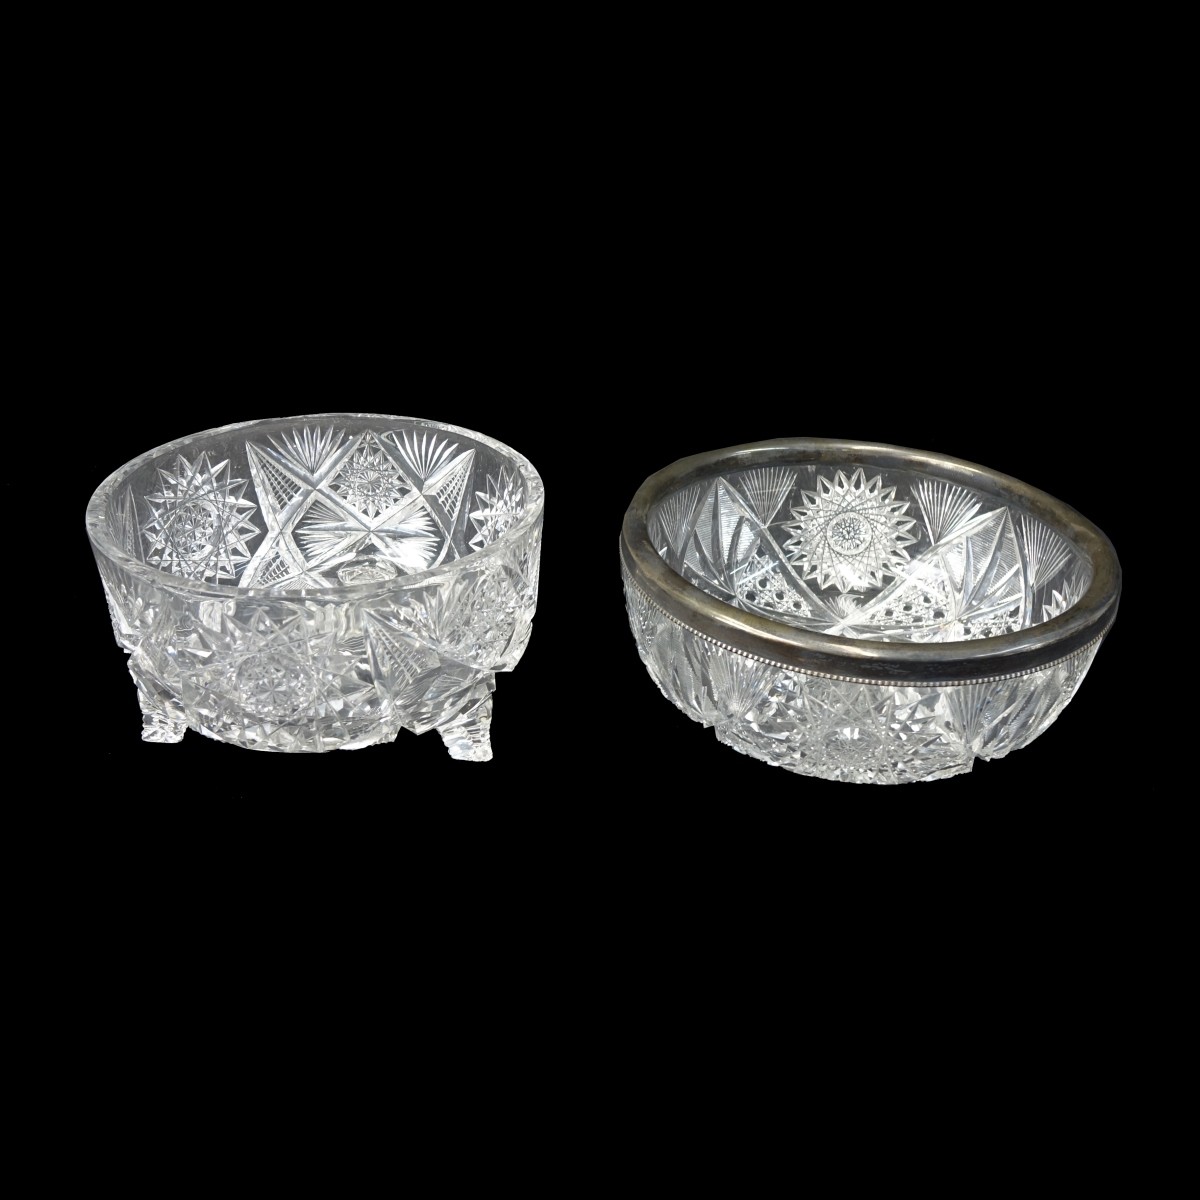 Two (2) Vintage Cut Glass Bowls